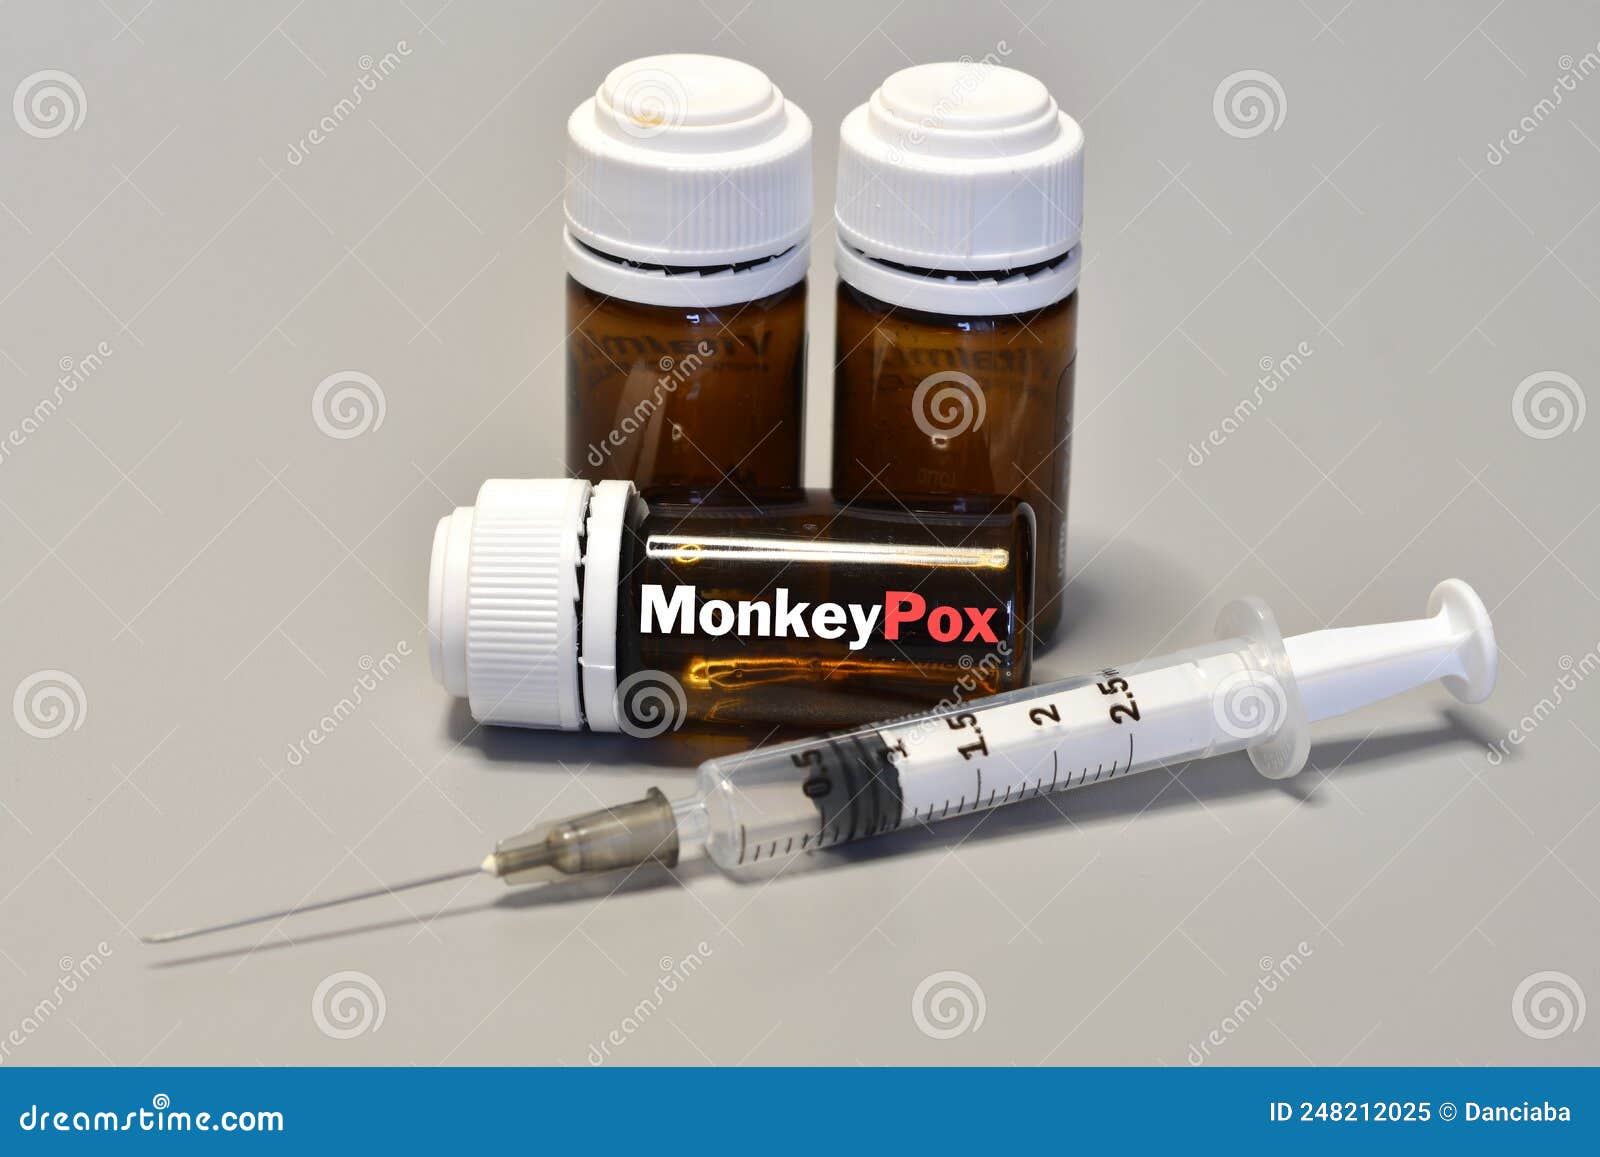 monkeypox virus. syringe and vaccine. treatment for new virus monkeypox